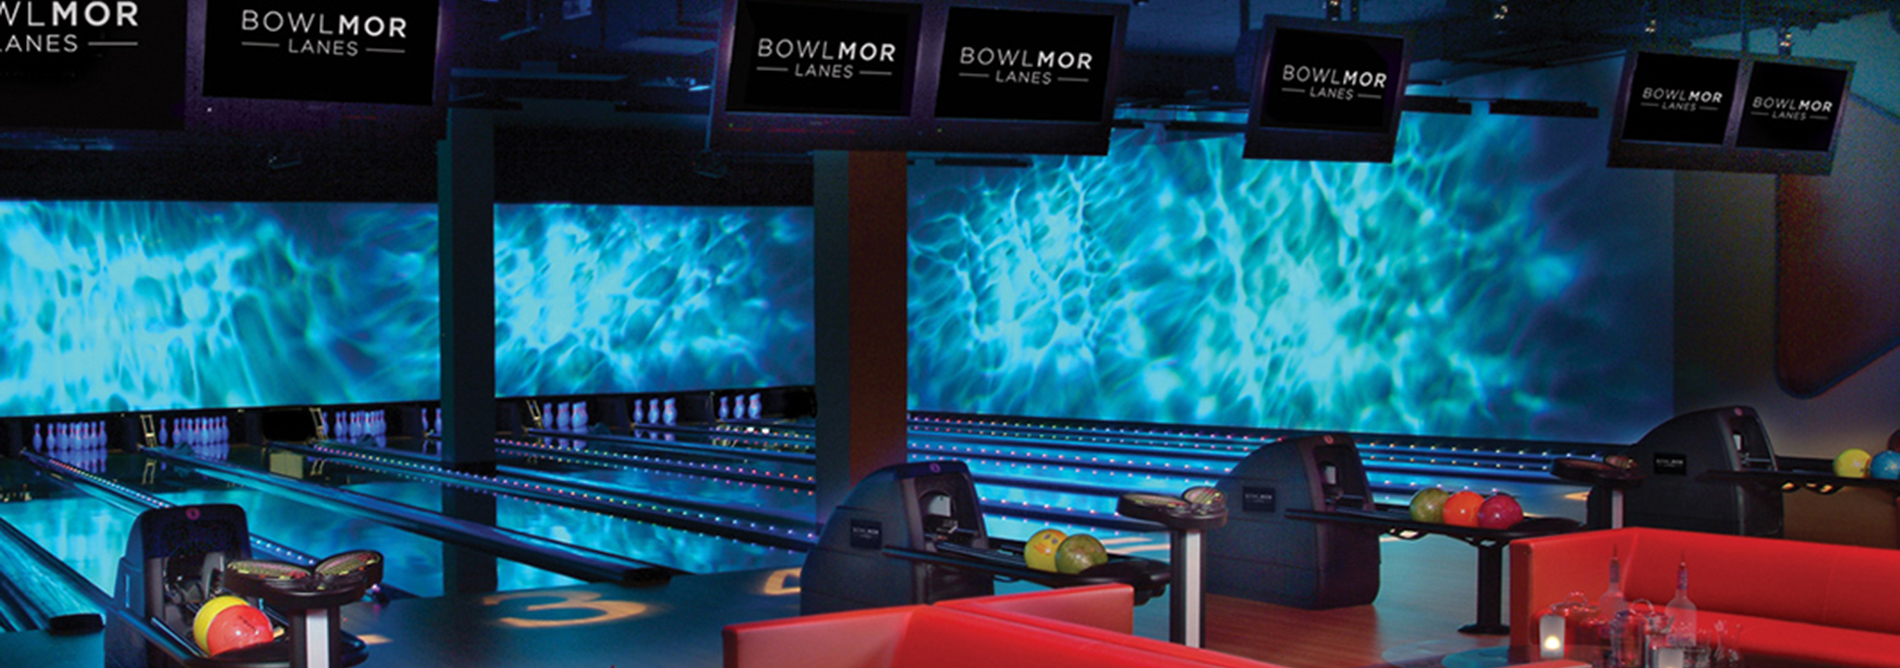 QUBICAAMF-bowling-hybrid-Bowlmor-Anaheim-banner.jpg